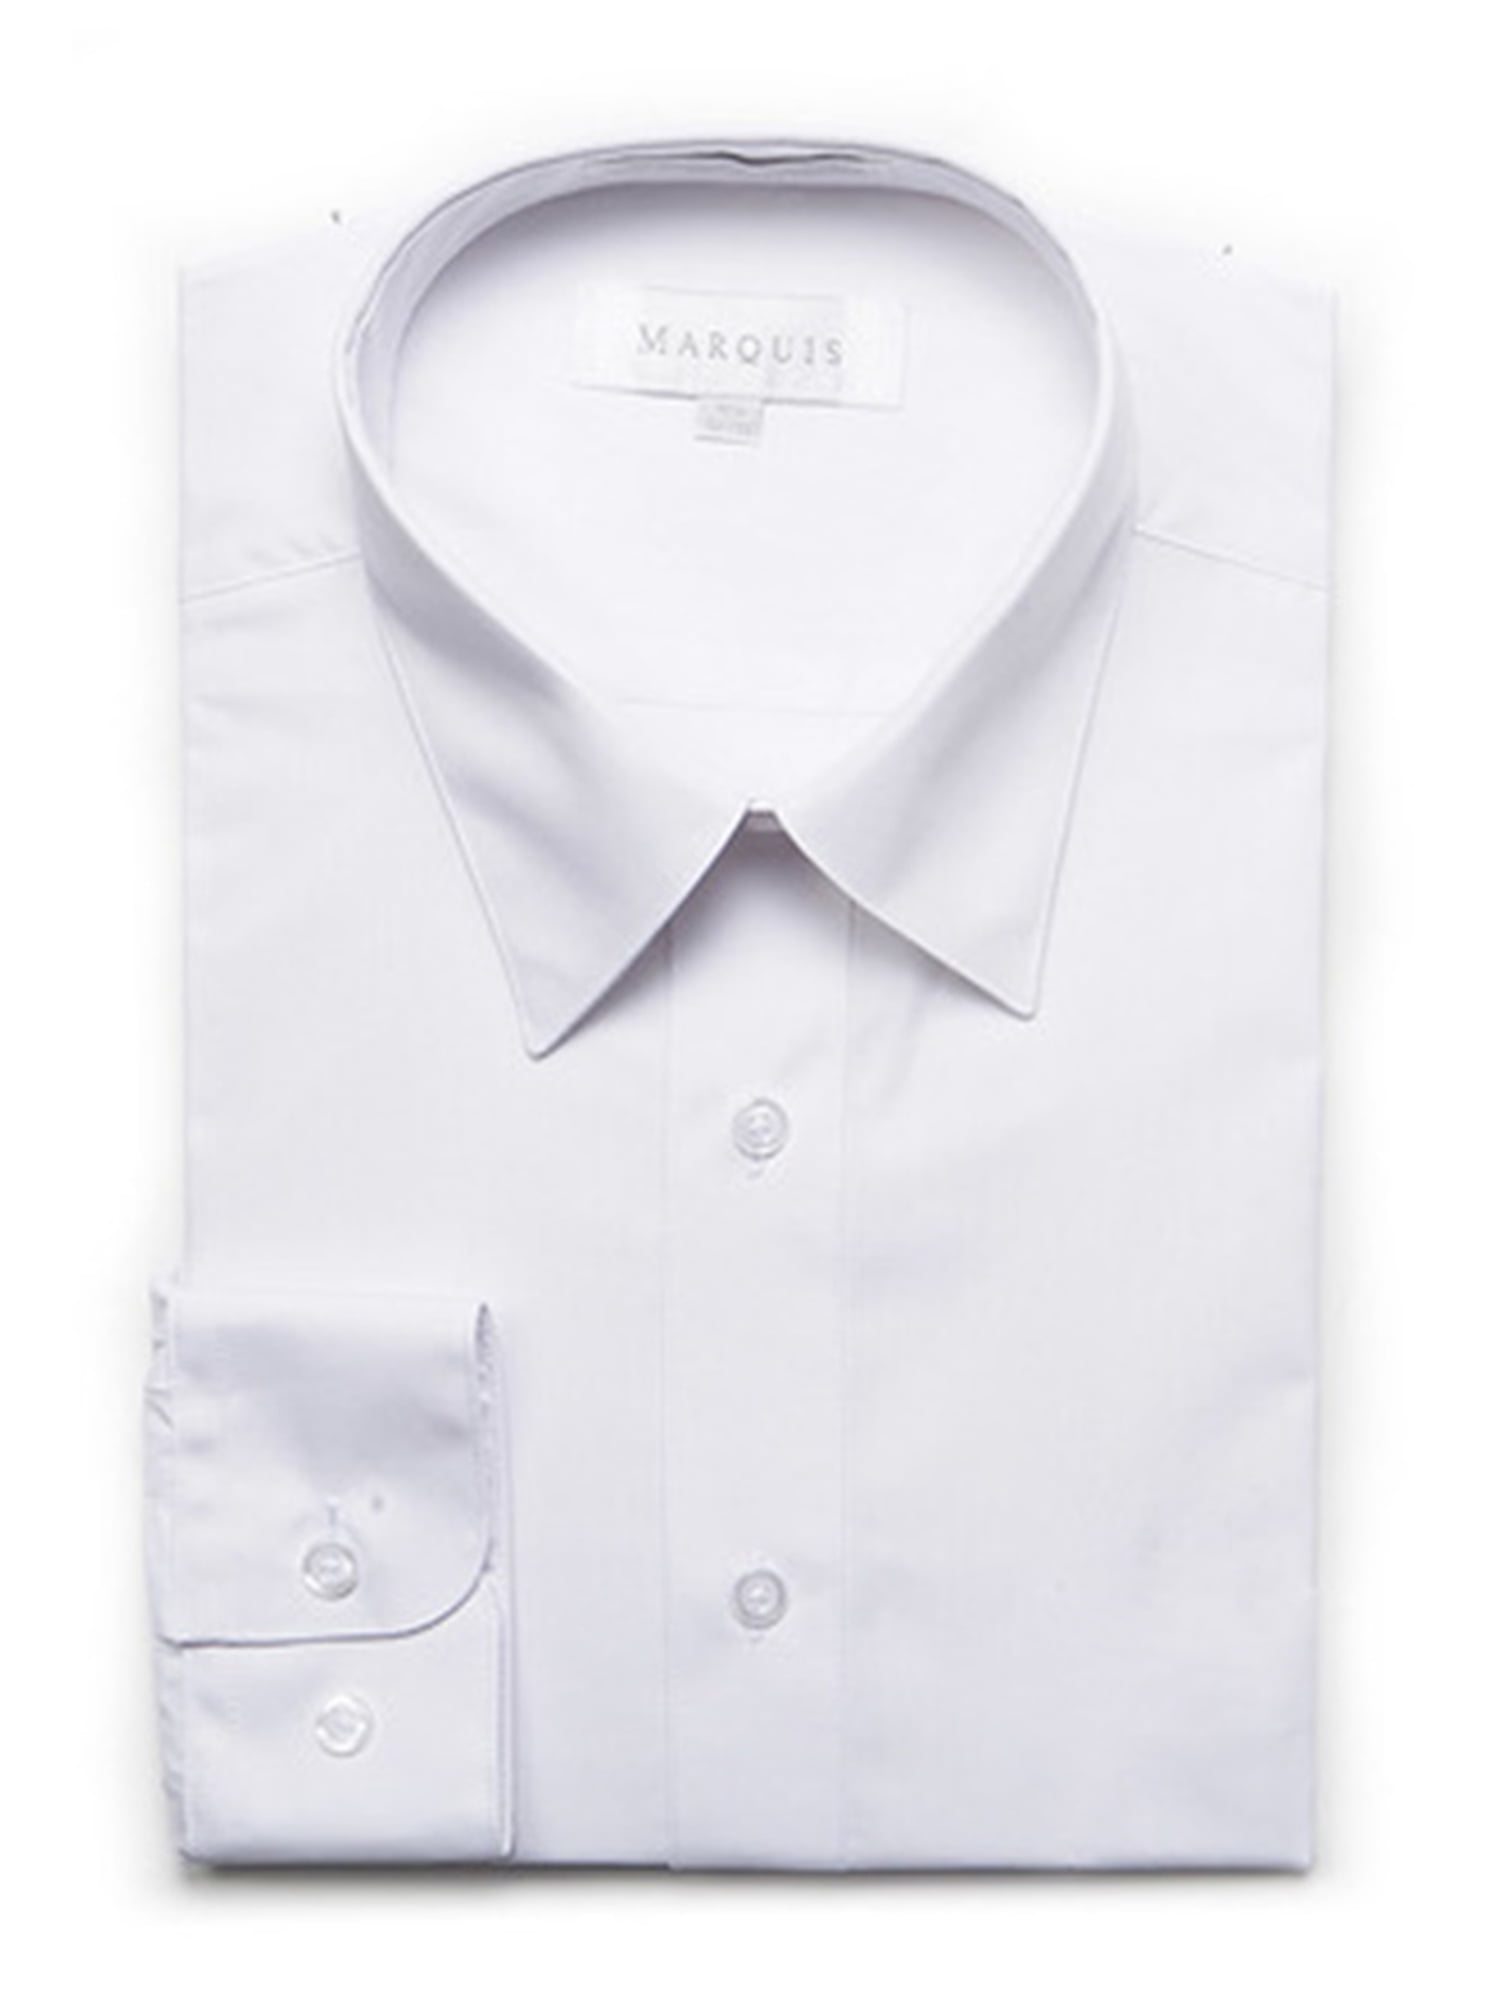 hanger Contour Echter Marquis Men's White Long Sleeve Slim Fit Dress Shirt N 15.5, S 34-35 -  Walmart.com